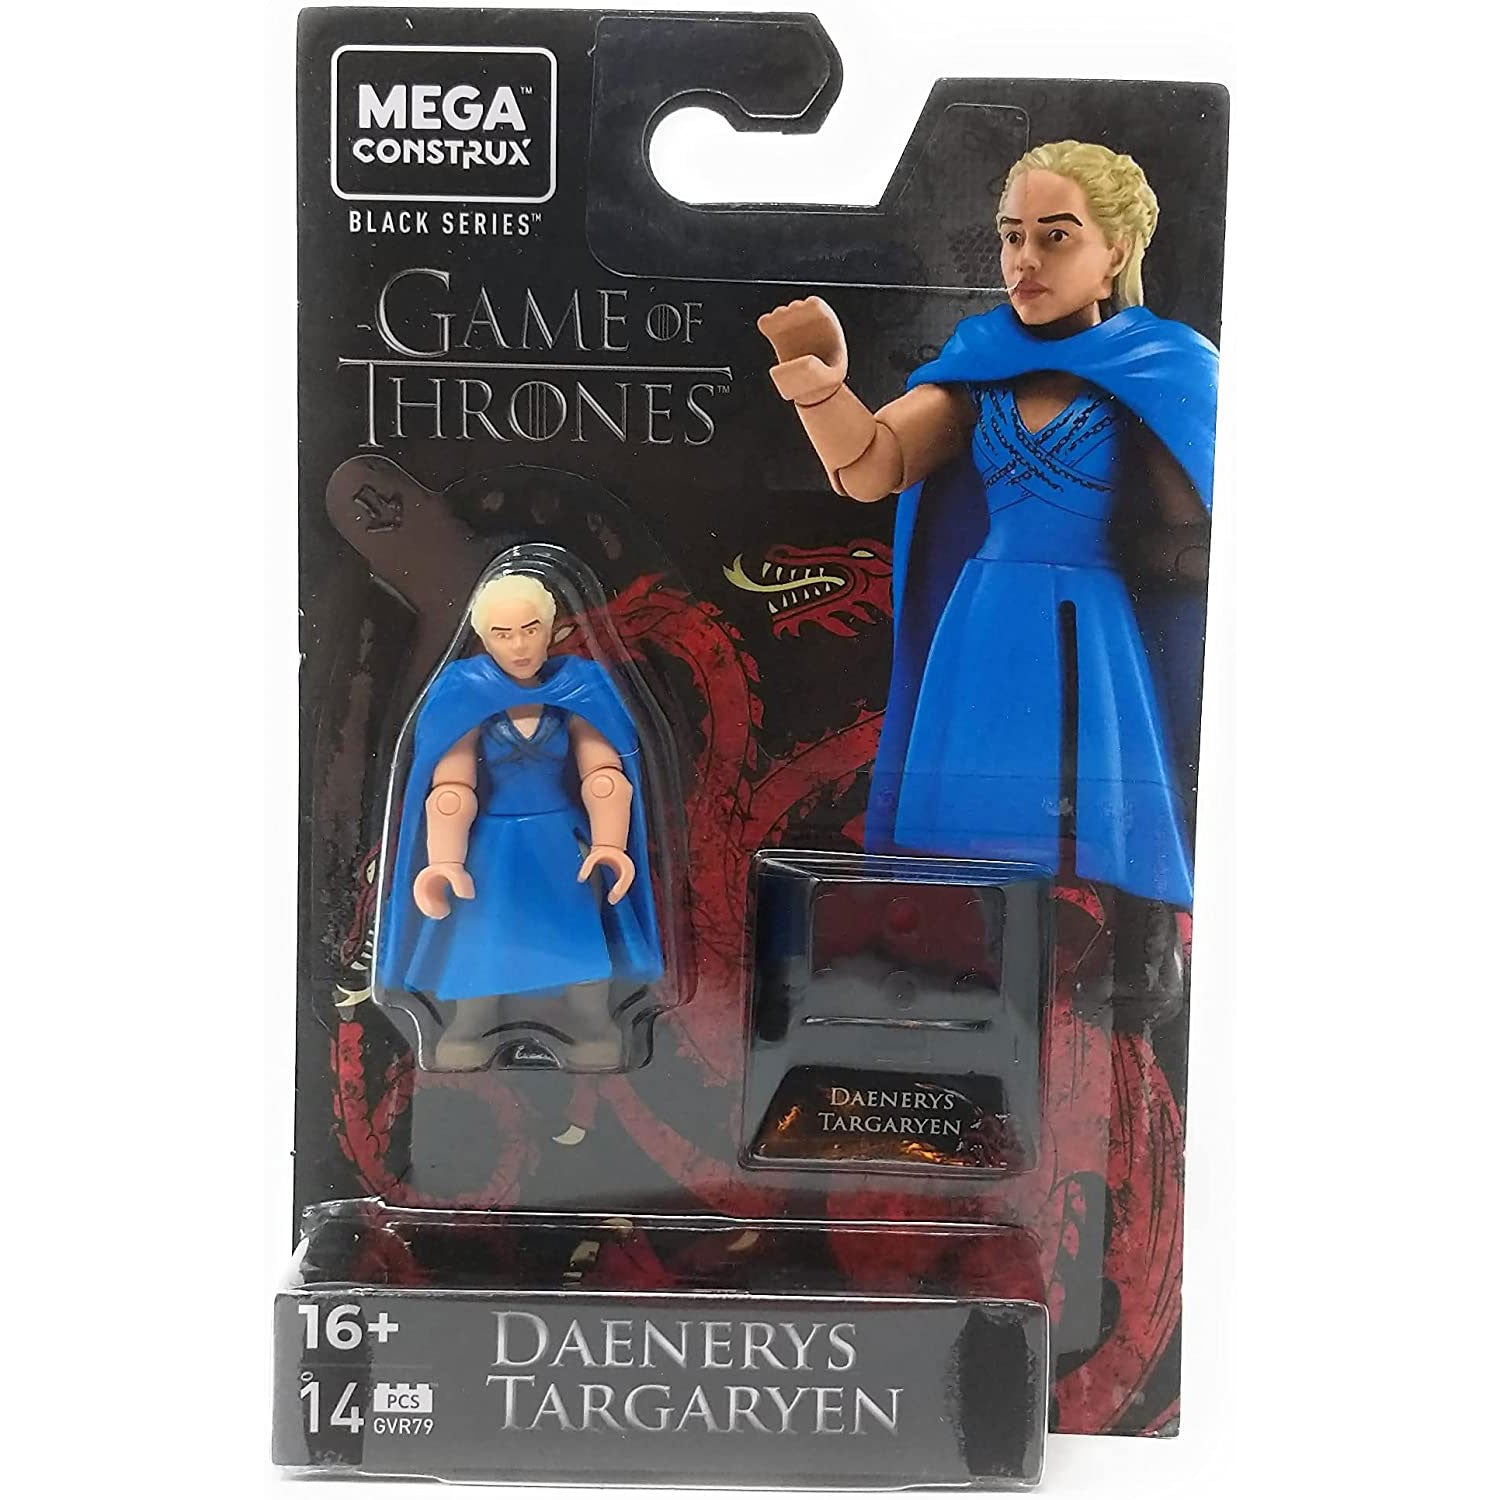 Daenerys Targaryen - Mega Construx Game of Thrones Black Series Figure Pack